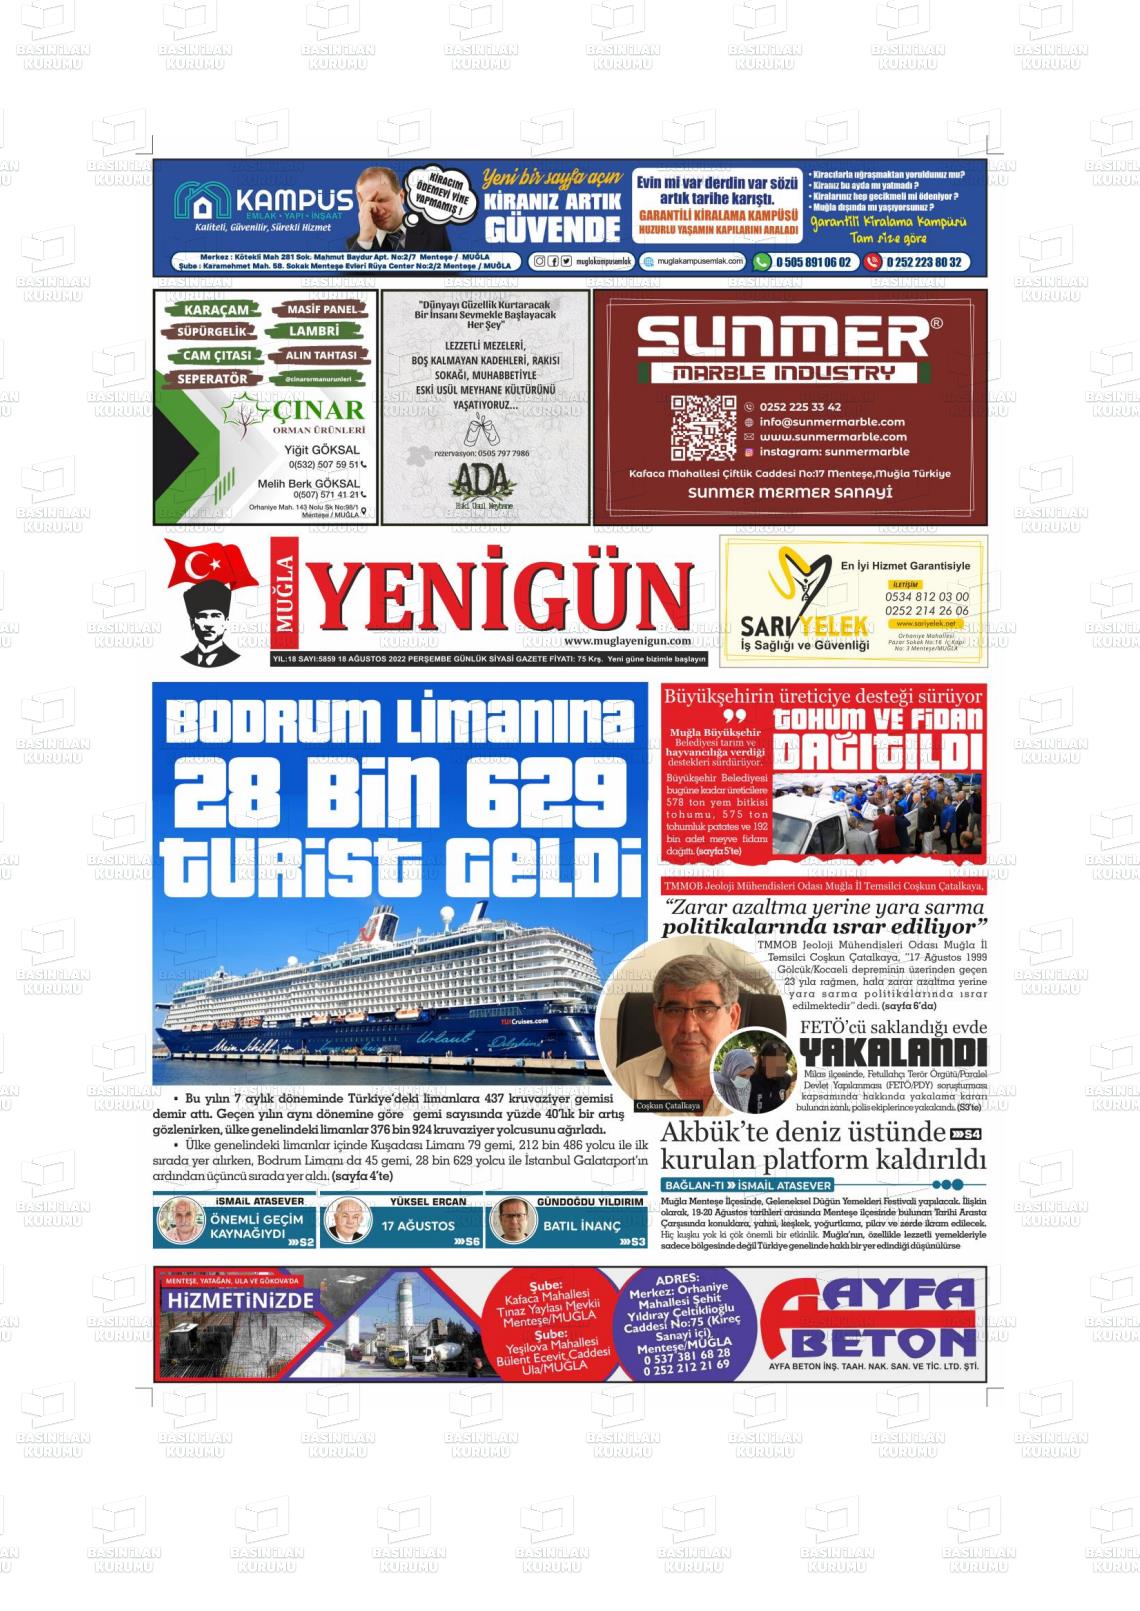 Muğla Yenigün Gazete Manşeti